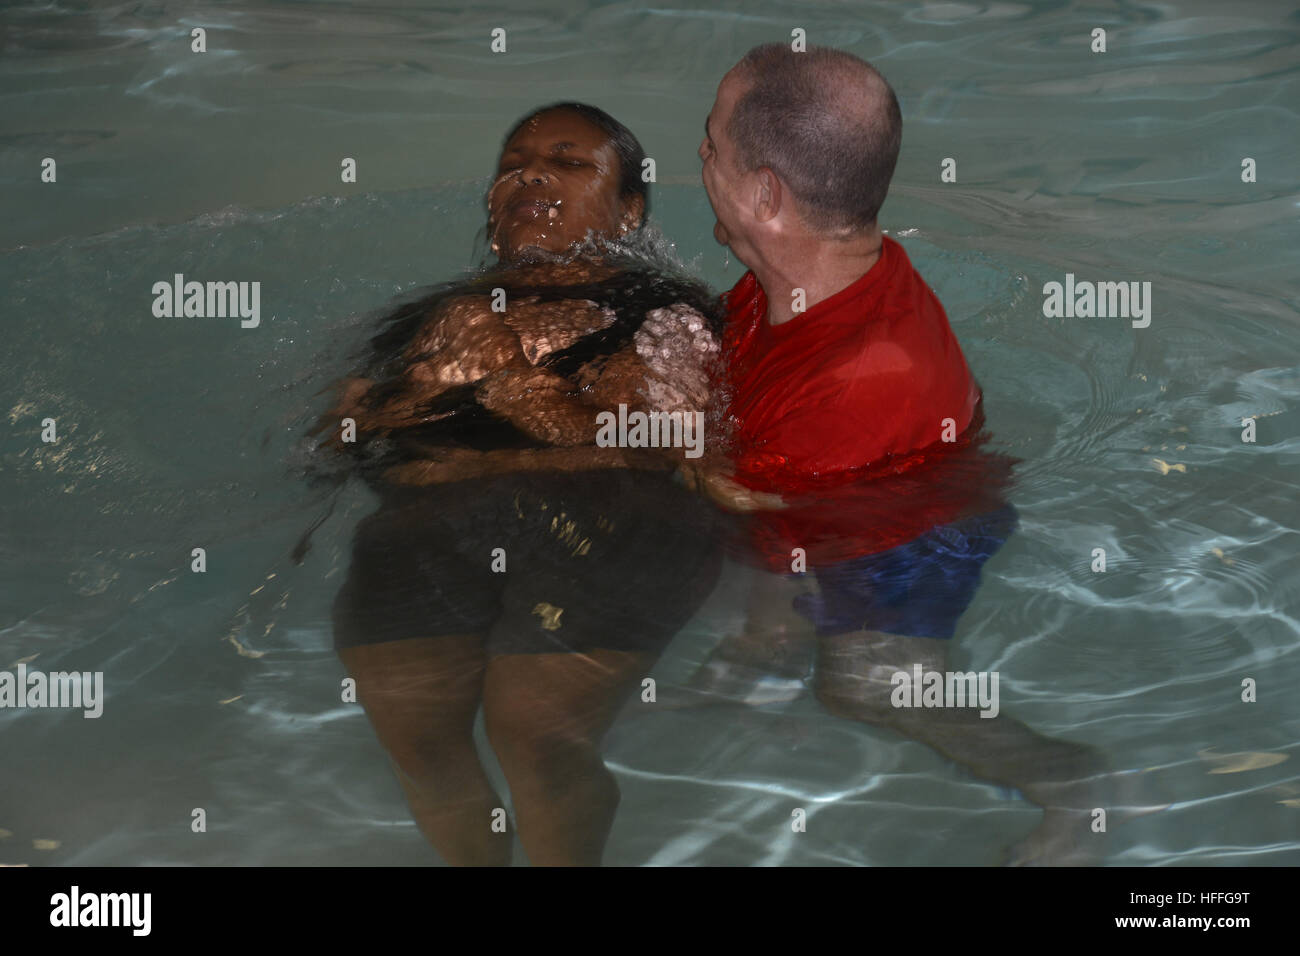 A preacher baptizes a woman during a baptismal ceremony Stock Photo